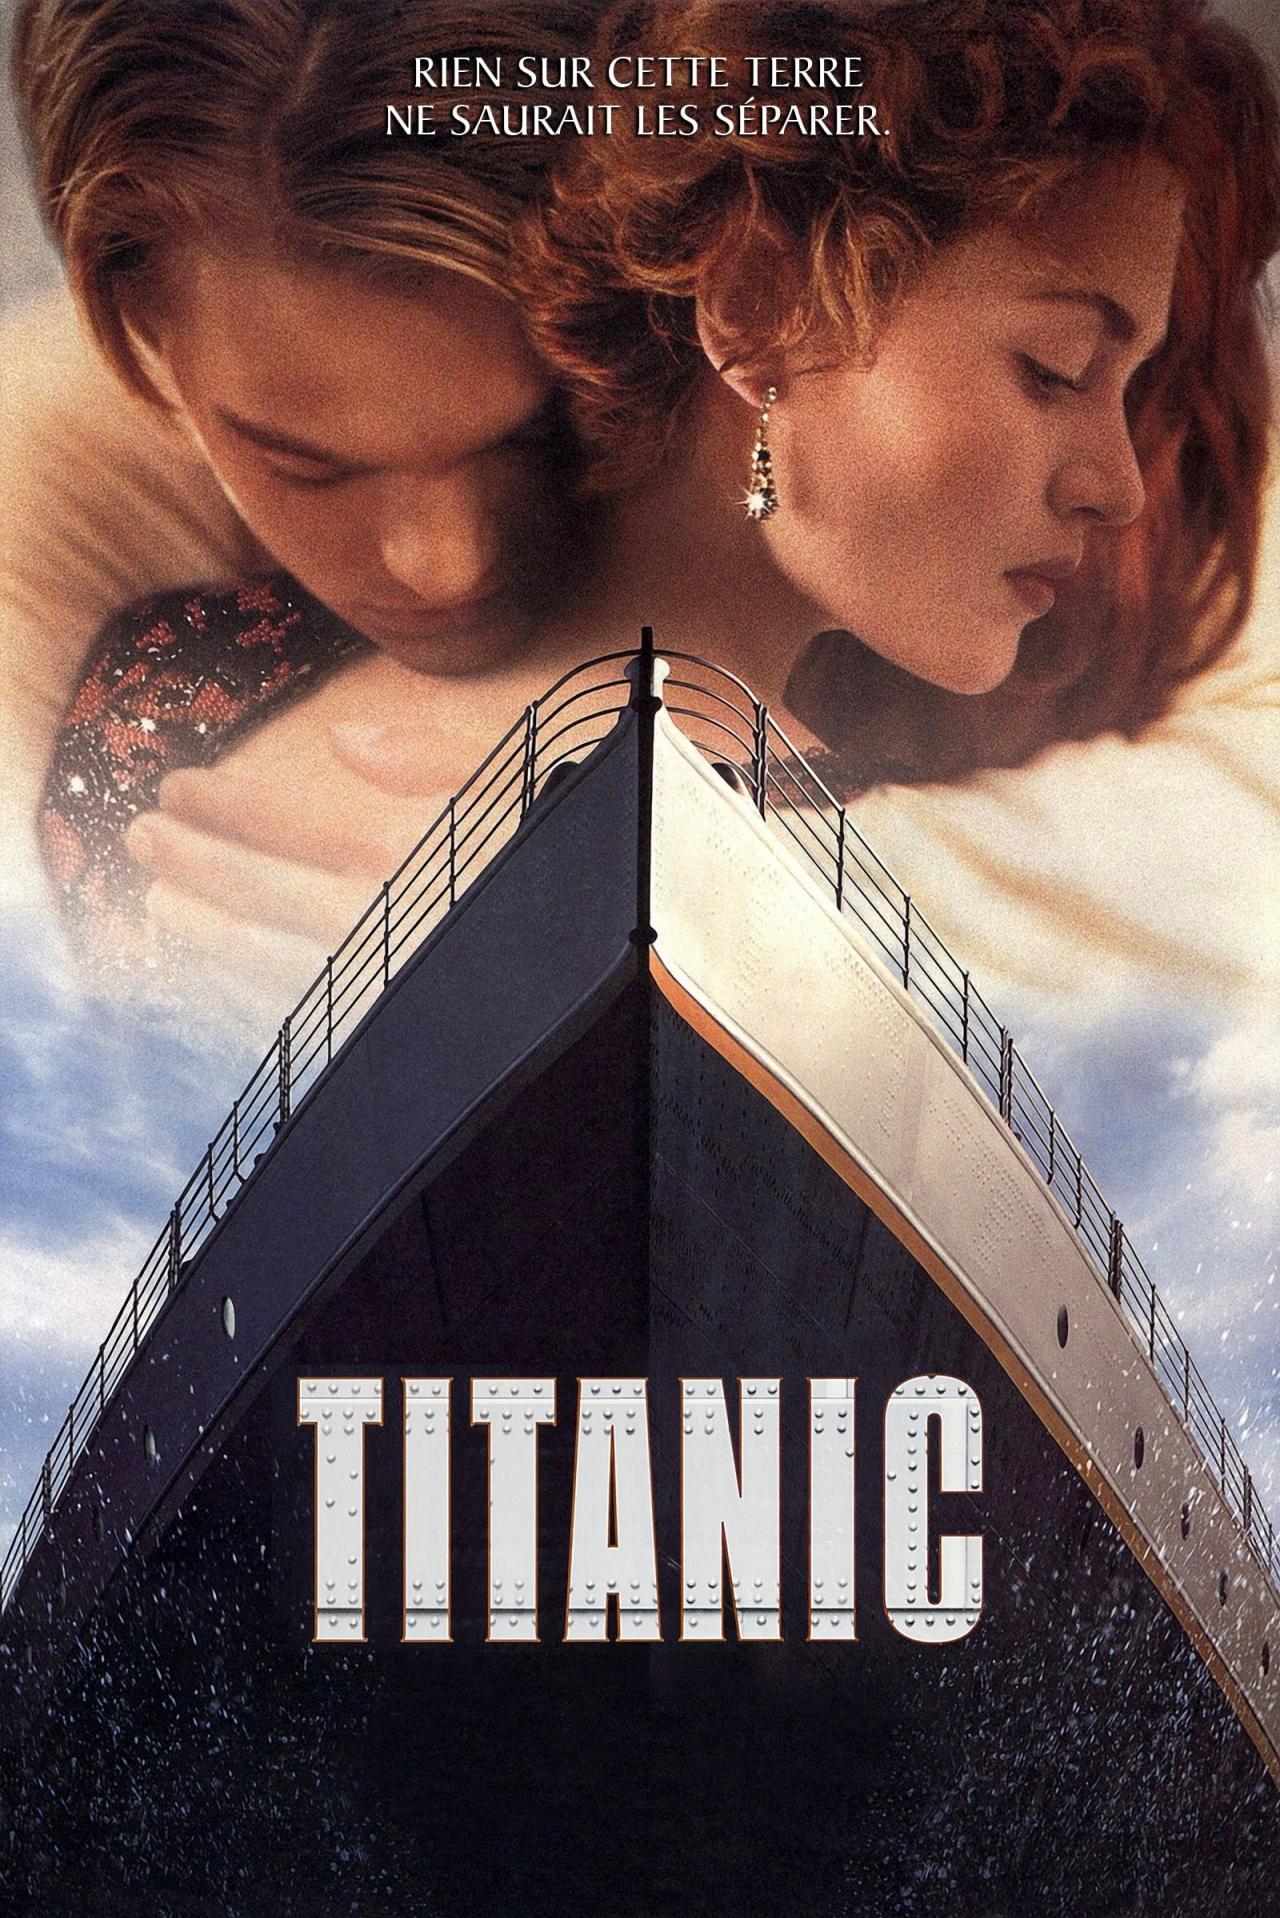 Affiche du film Titanic